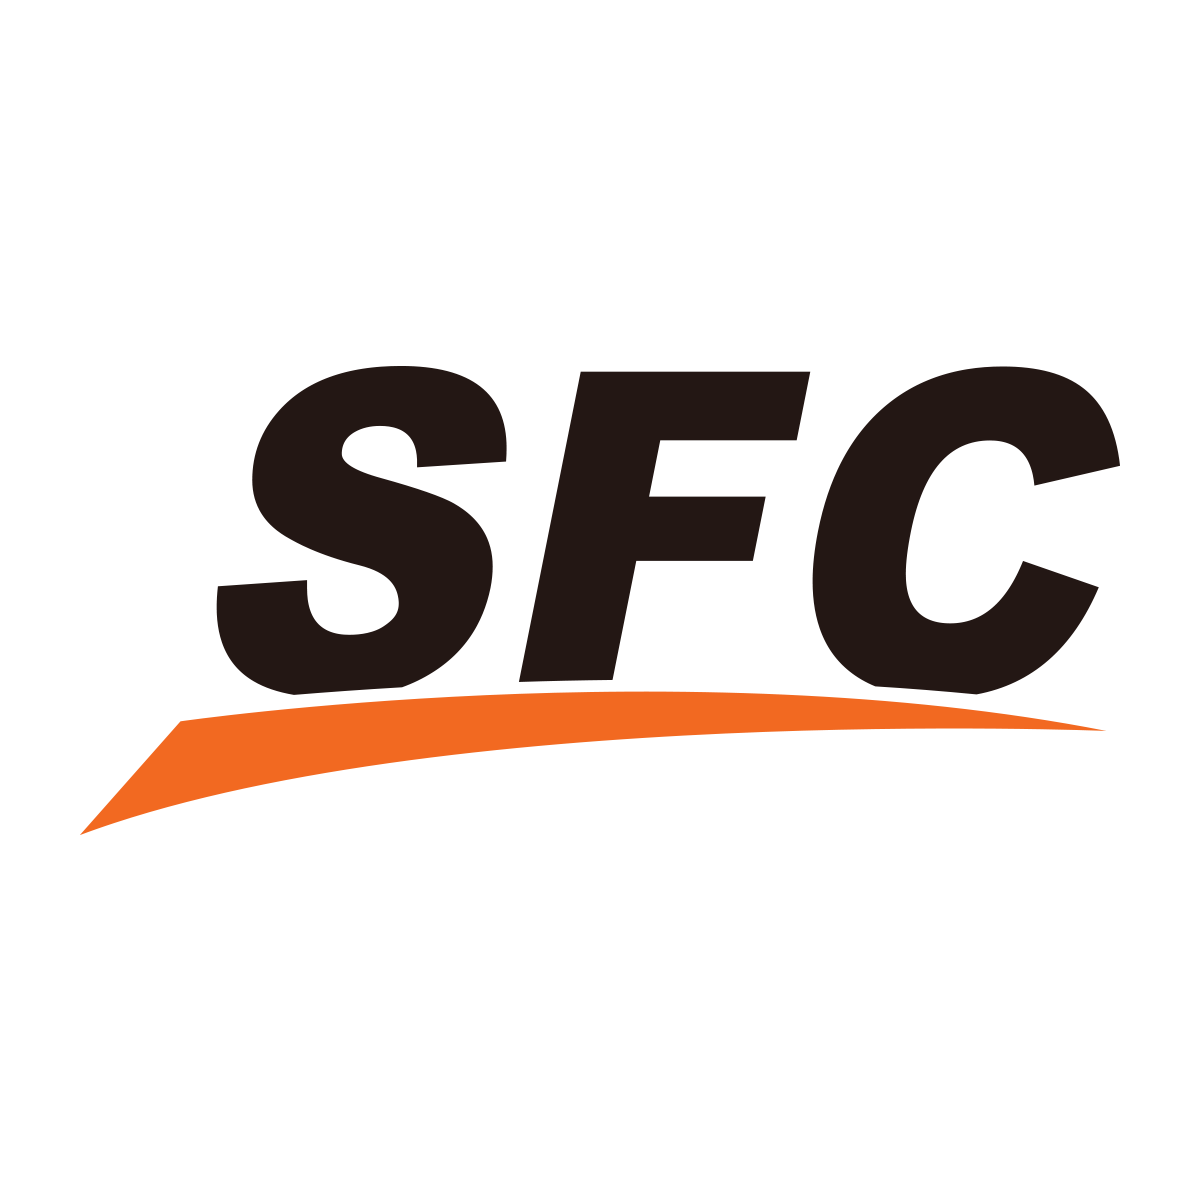 SFC